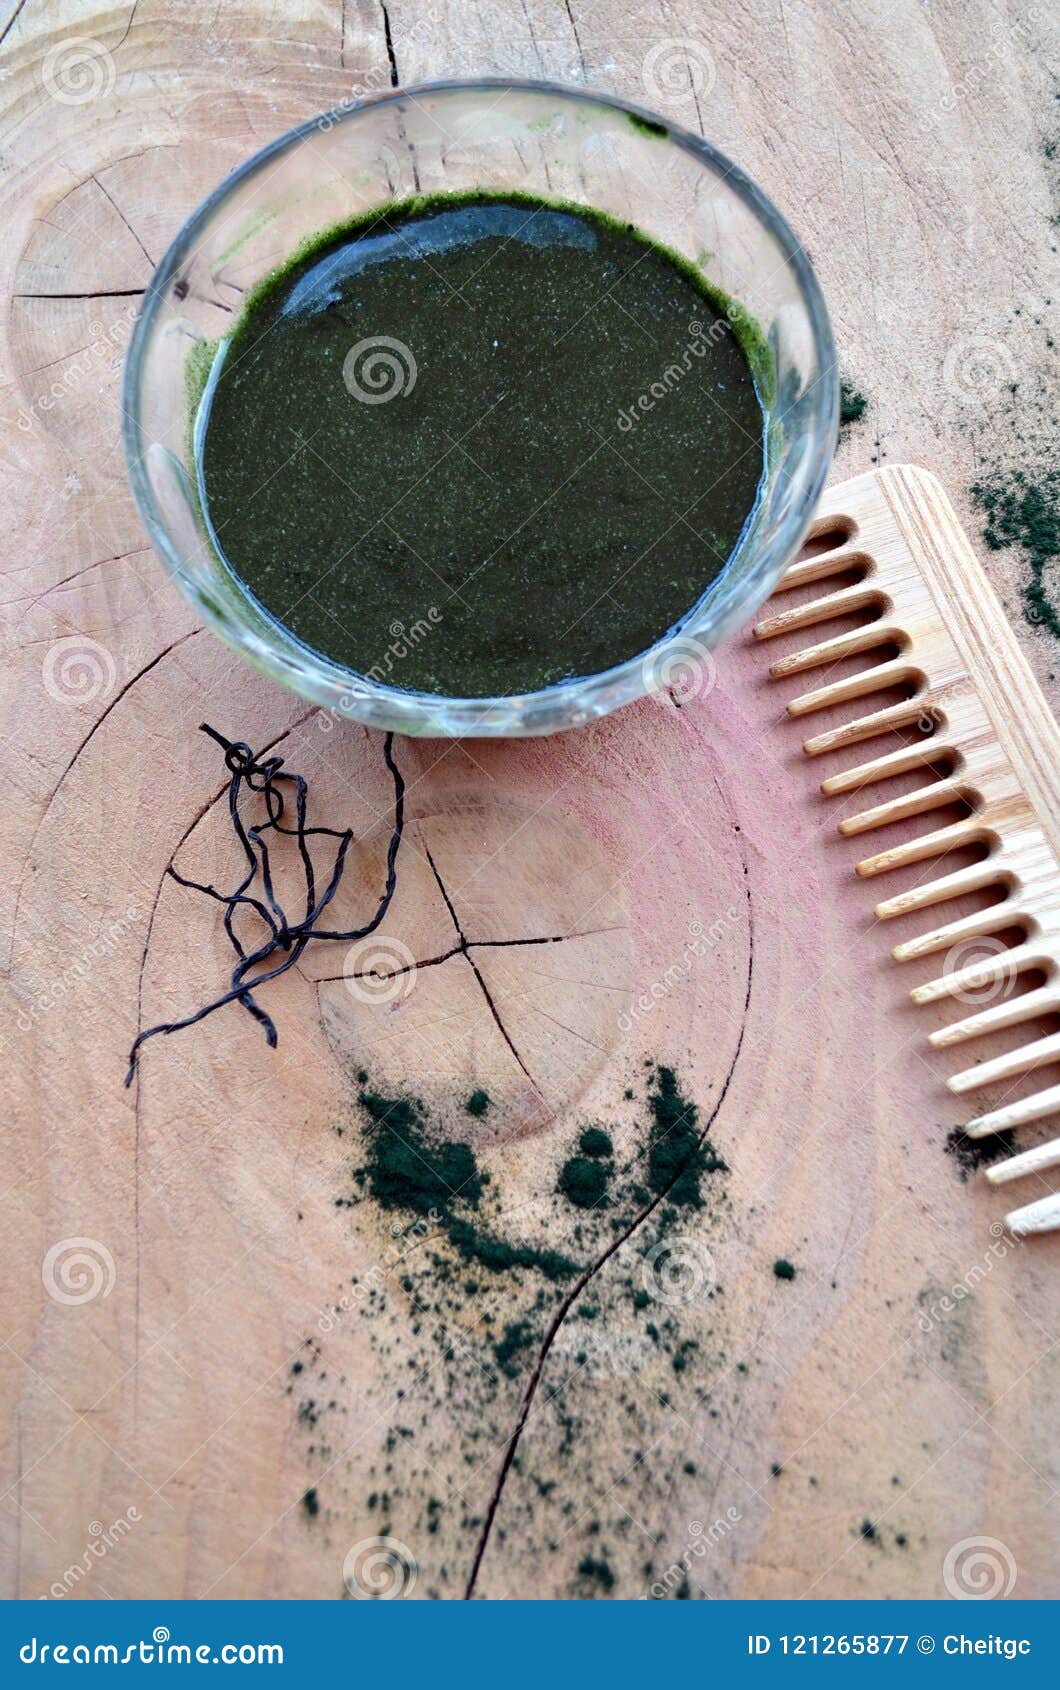 Homemade Natural Spirulina Hair Mask Stock Image - Image of herbal,  healthy: 121265877